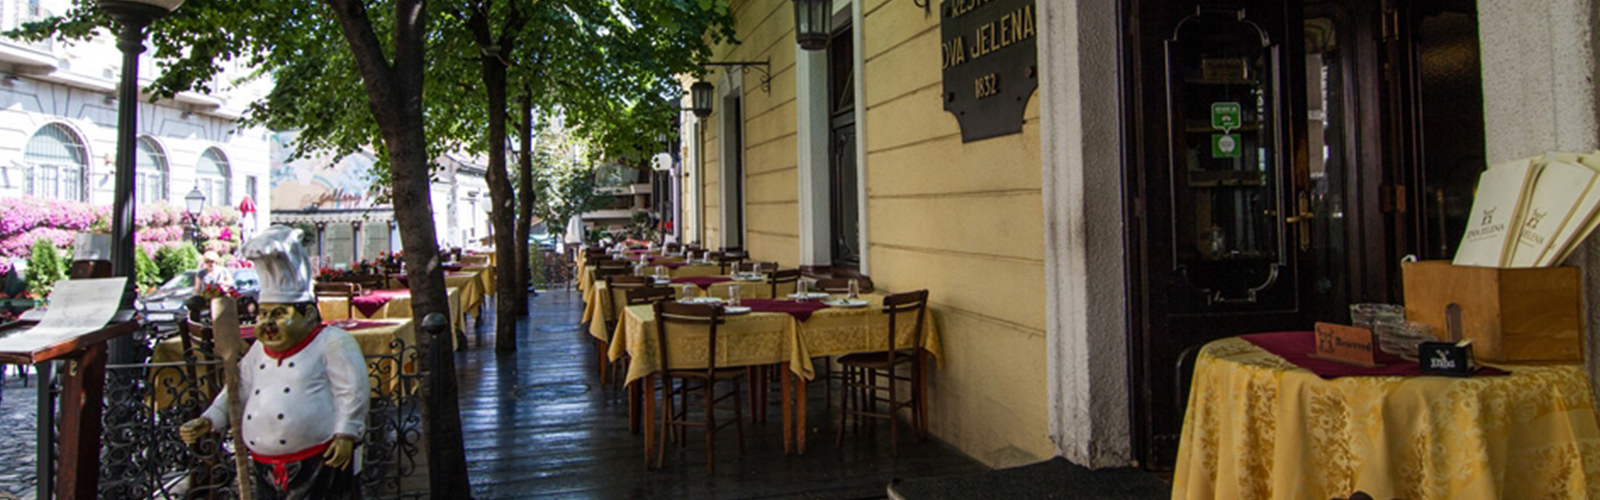 Concierge Belgrade | Restoran Dva jelena